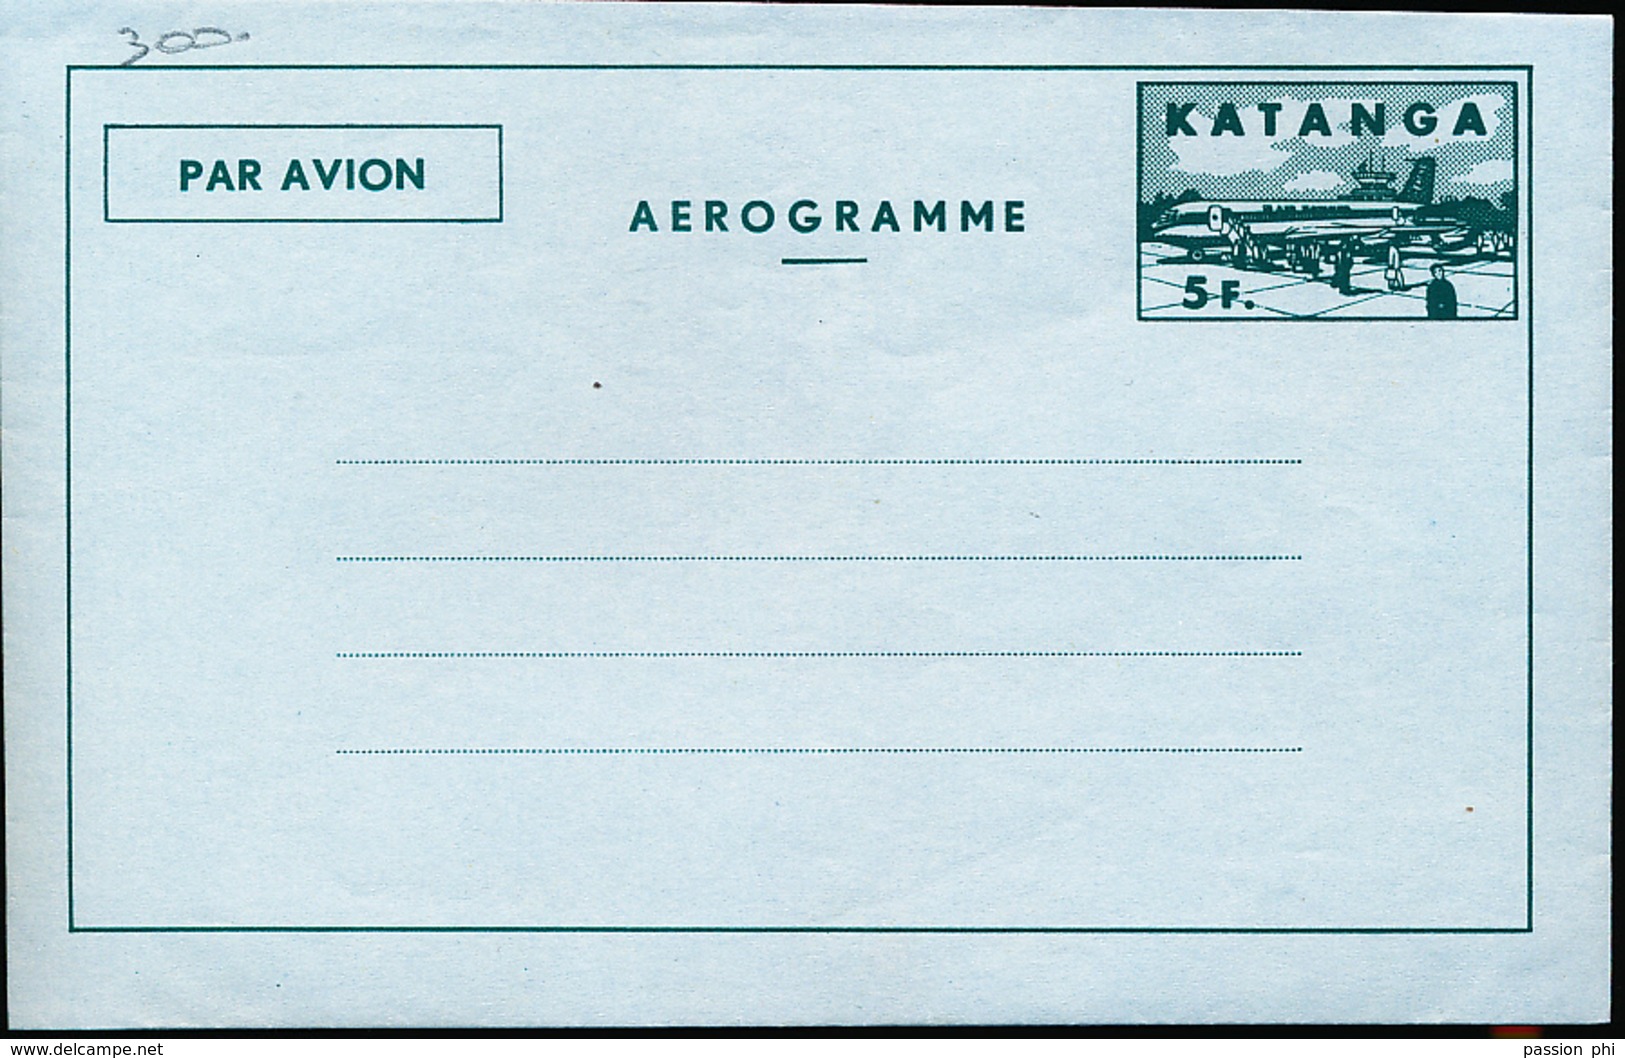 KATANGA 1962 ISSUE AIRLETTER STIBBE 3 UNUSED - Katanga